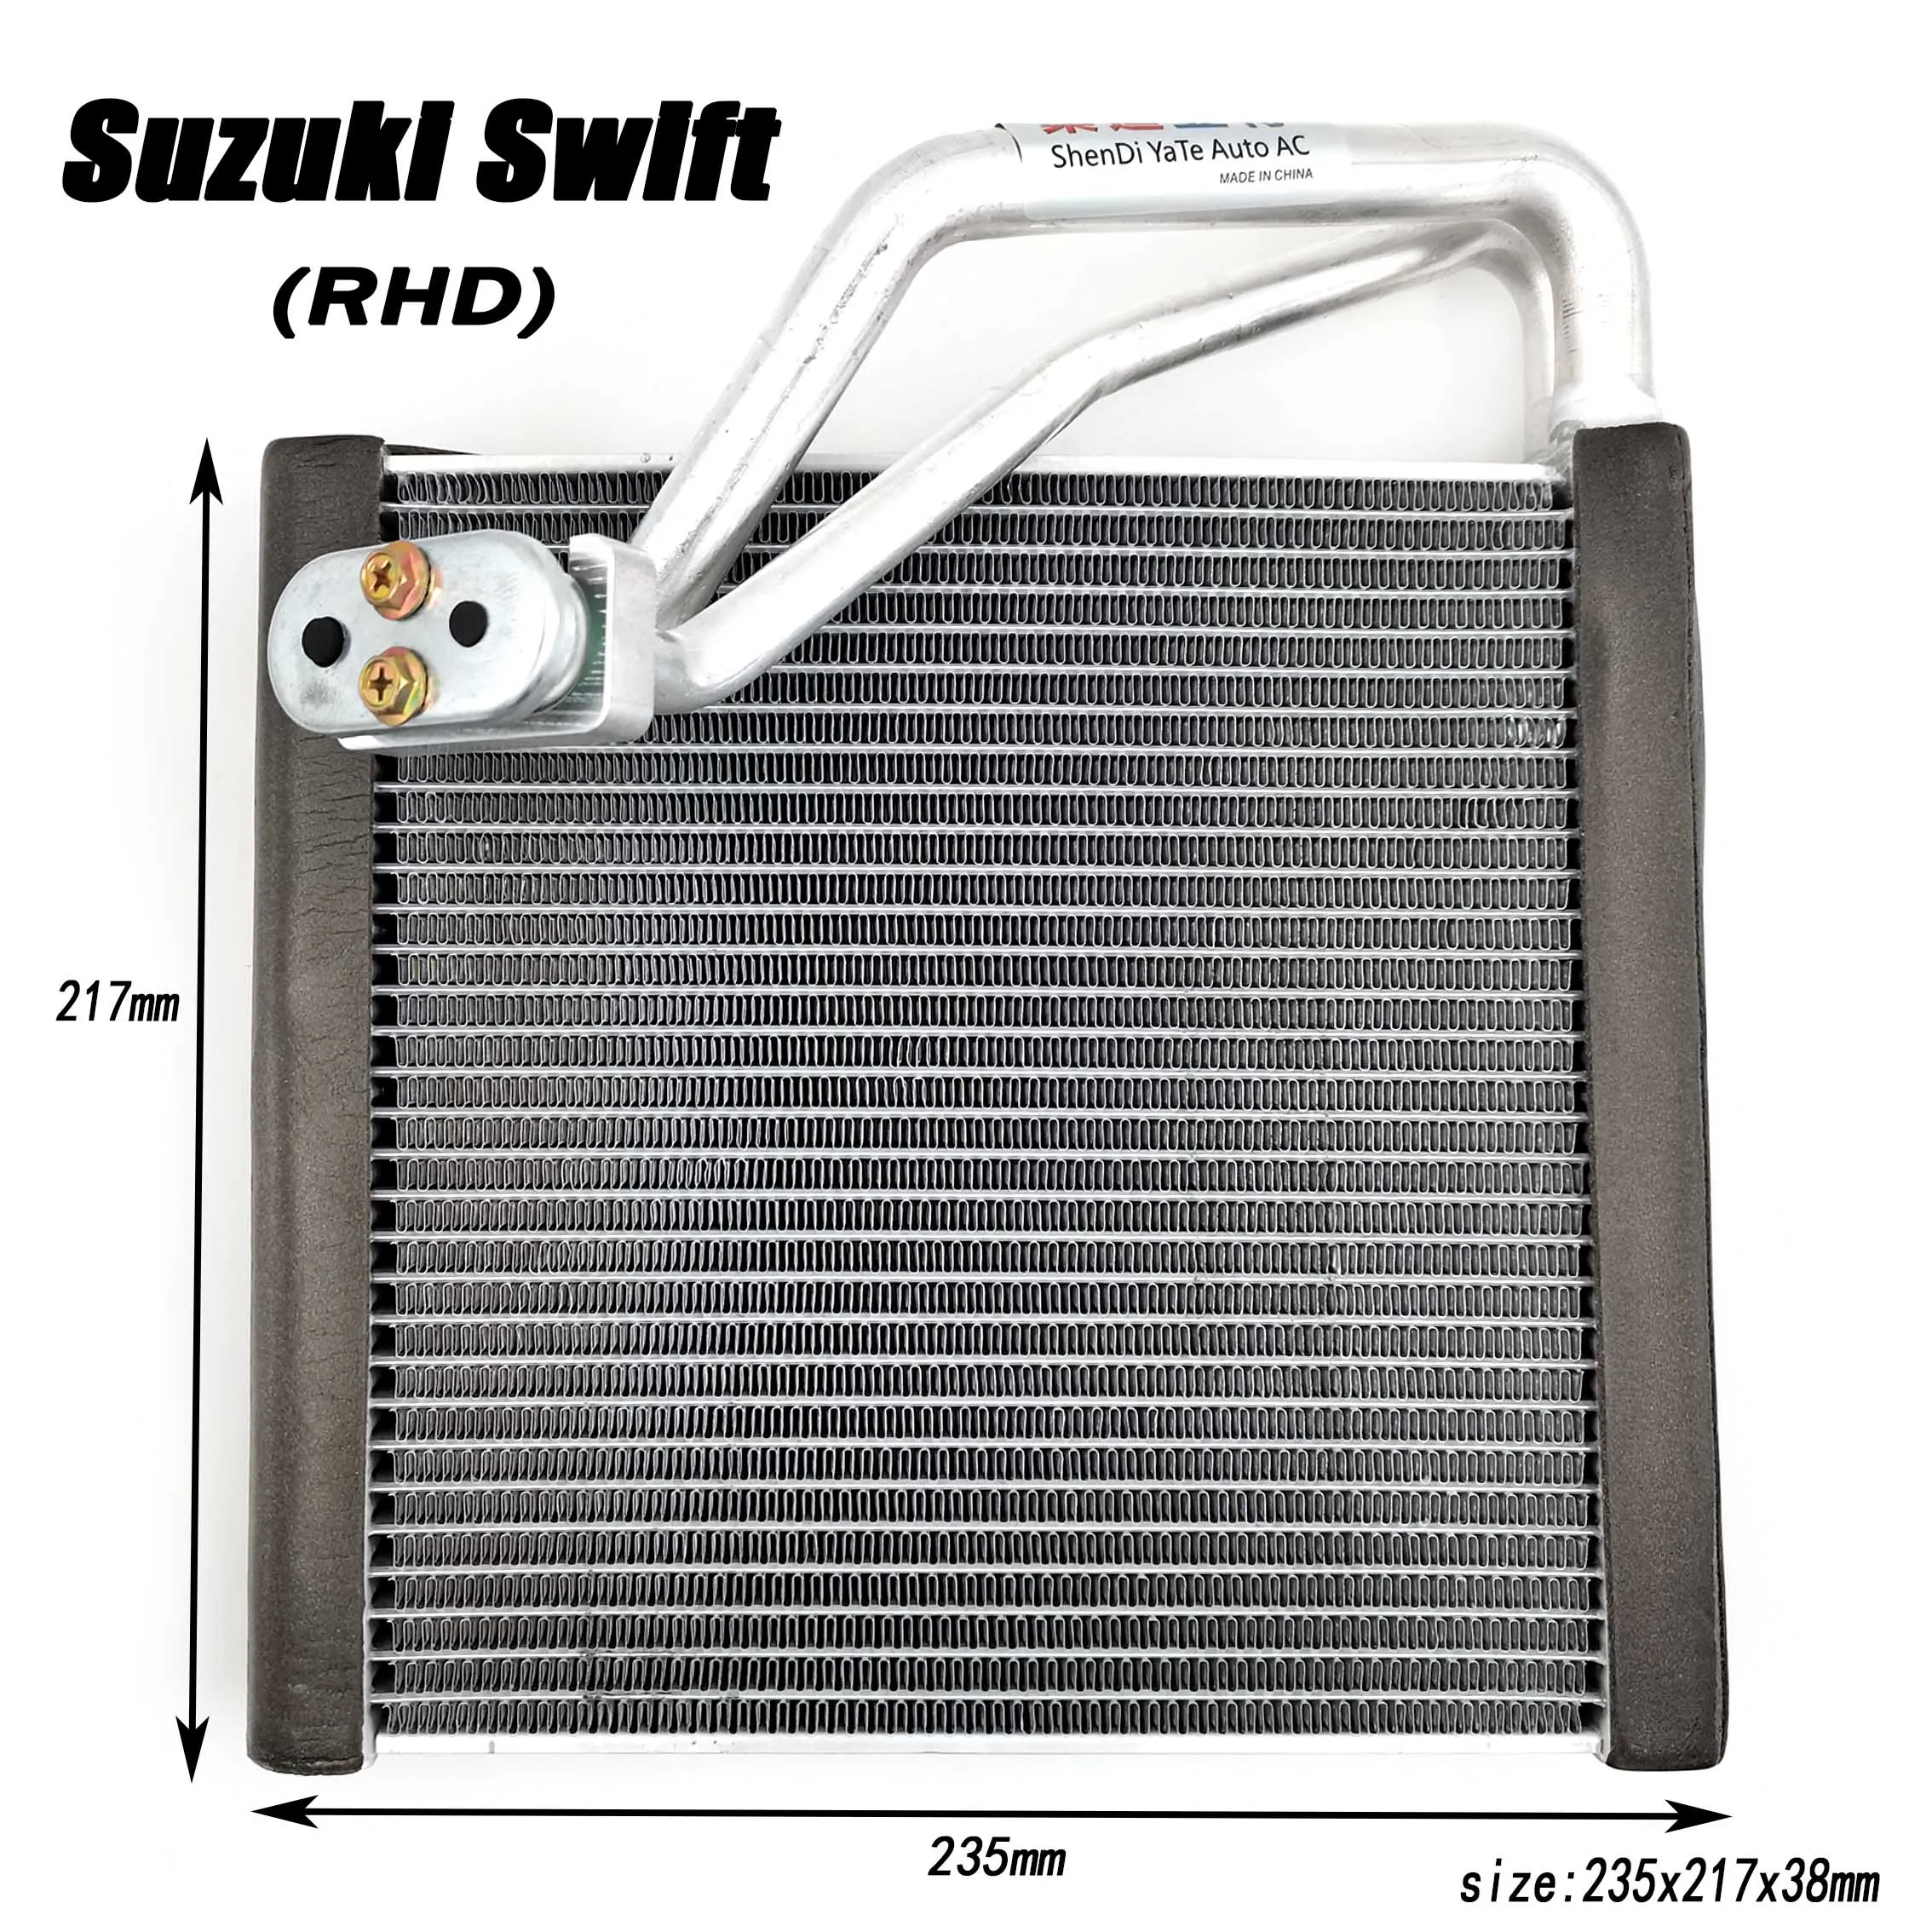 

SDYT Auto A/C Evaporator Core For Suzuki Swift RHD 95411-71L00 Car Air Conditioning Repair Parts Accessories